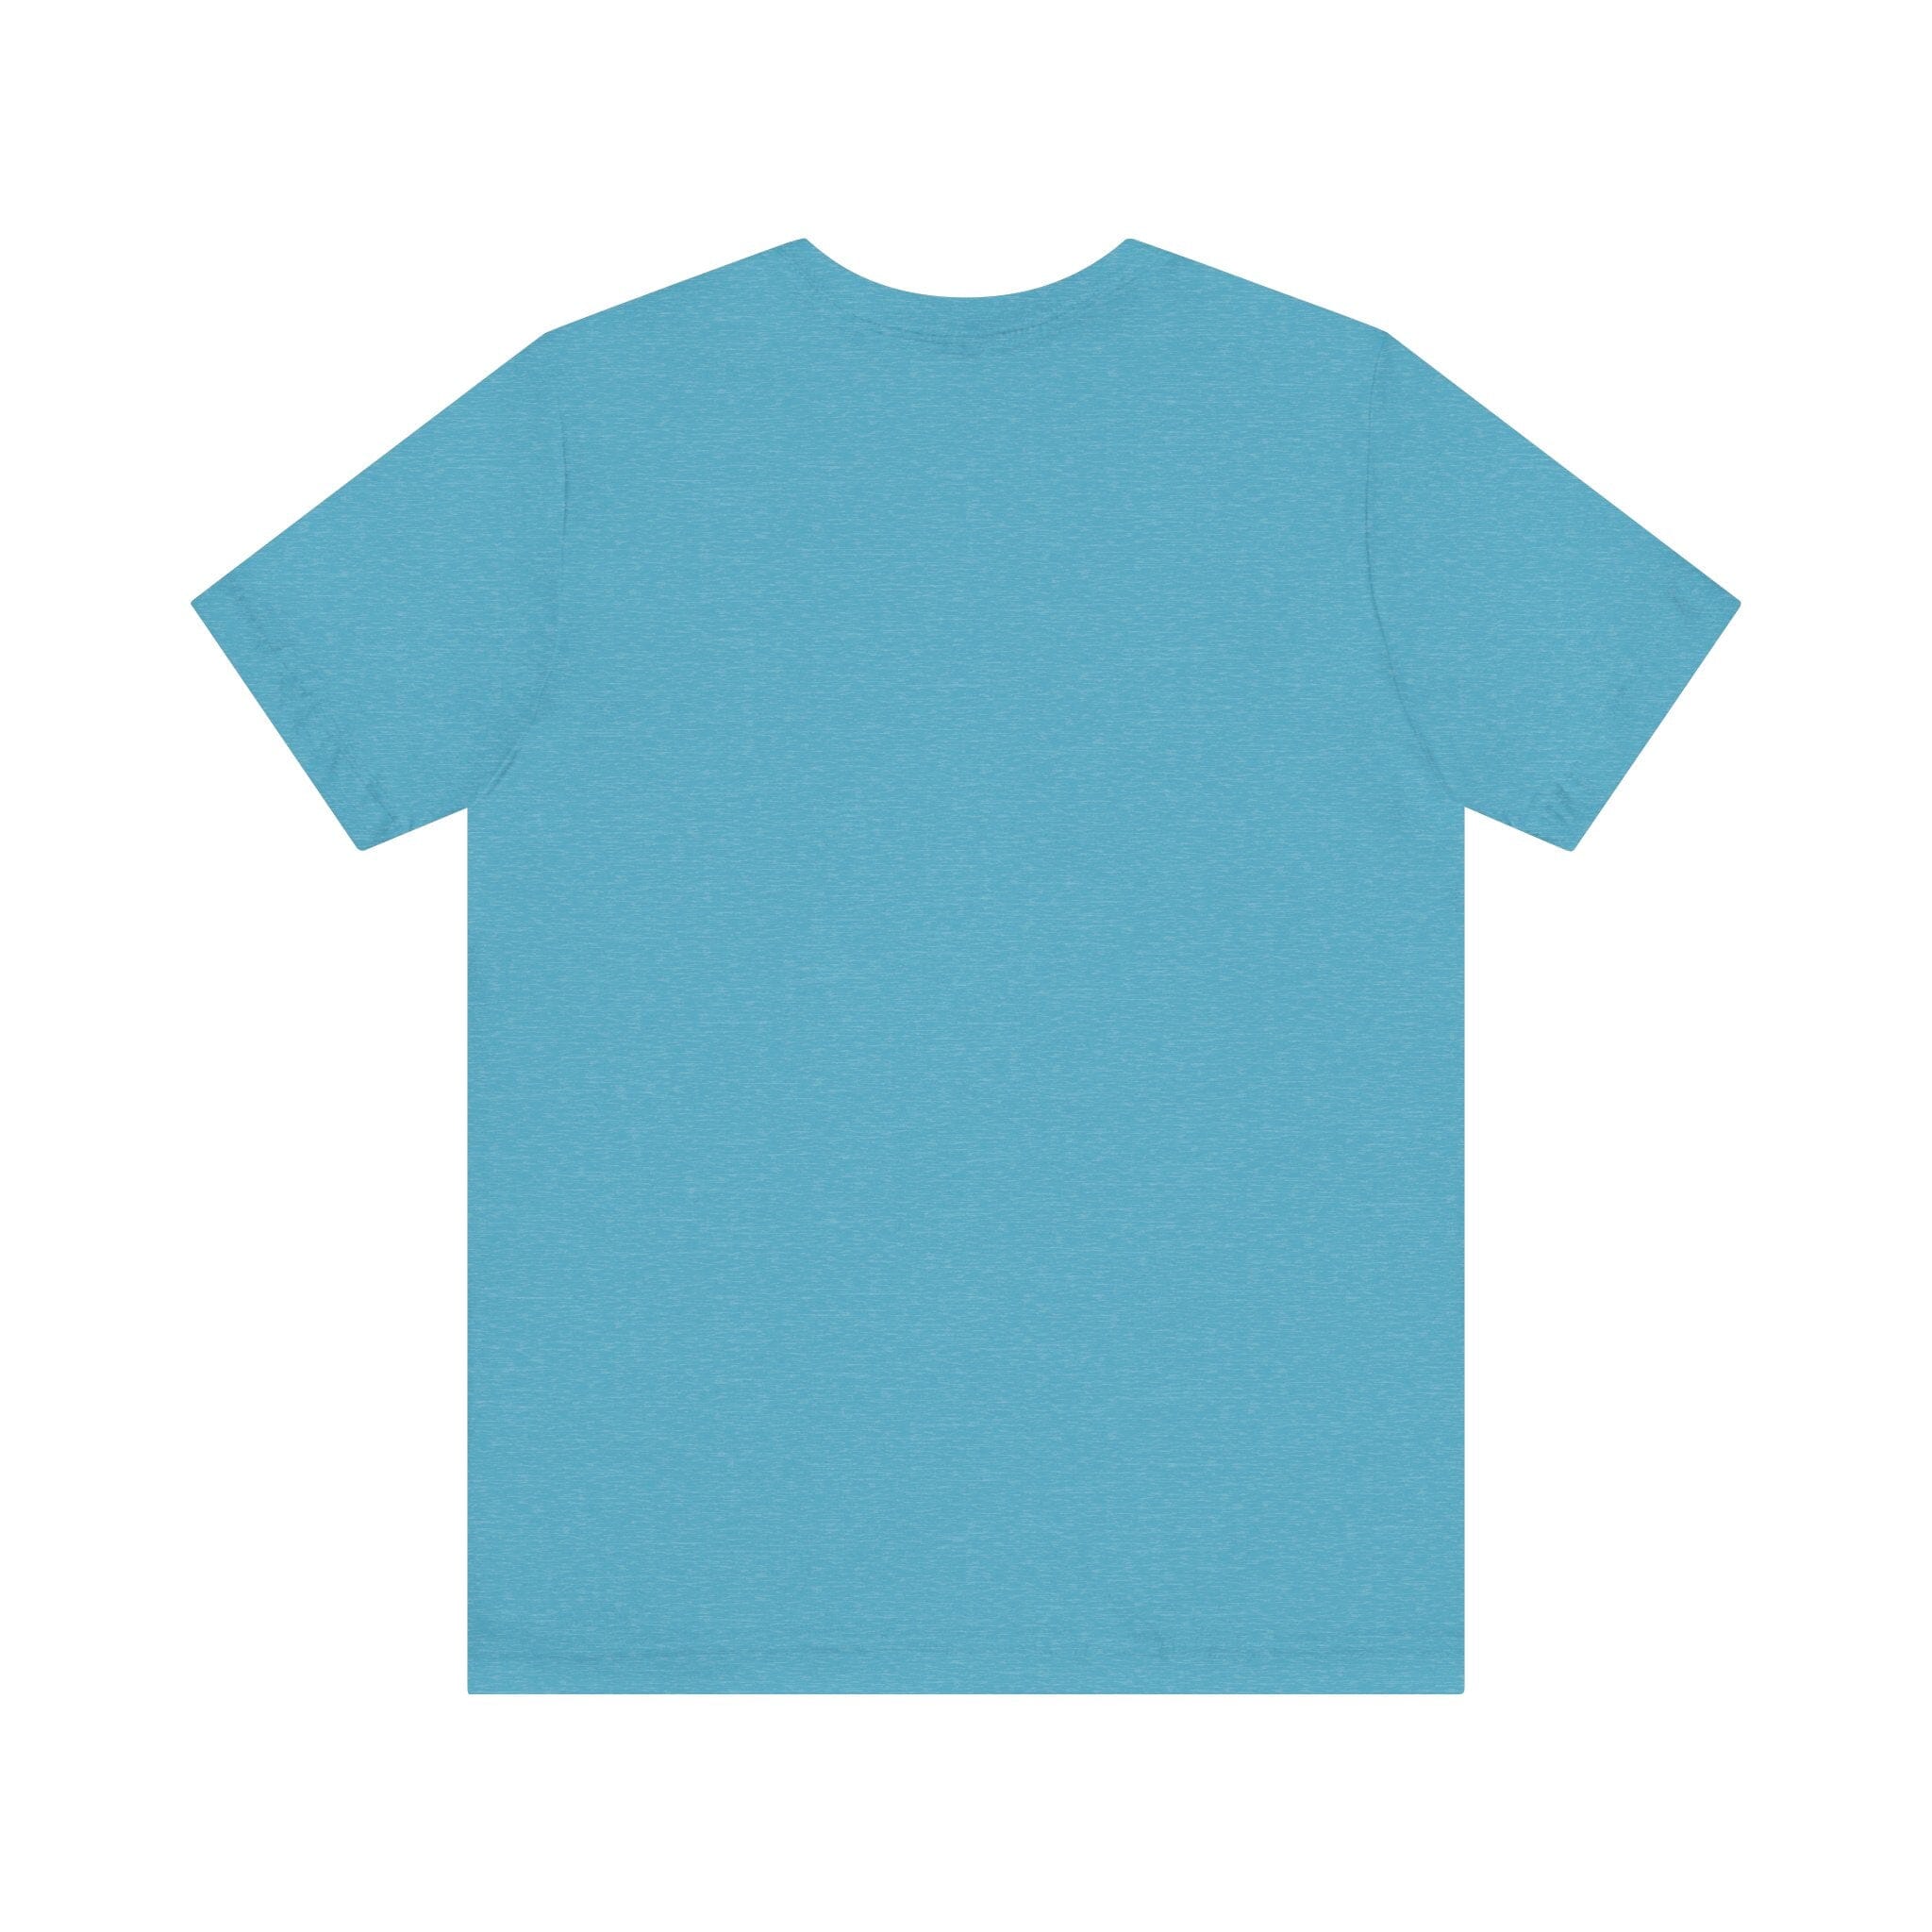 Hot Flash Summer | Womens Short Sleeve Bella Tee | 4 colors | S-4XL | Hope Swag T-Shirt Printify 